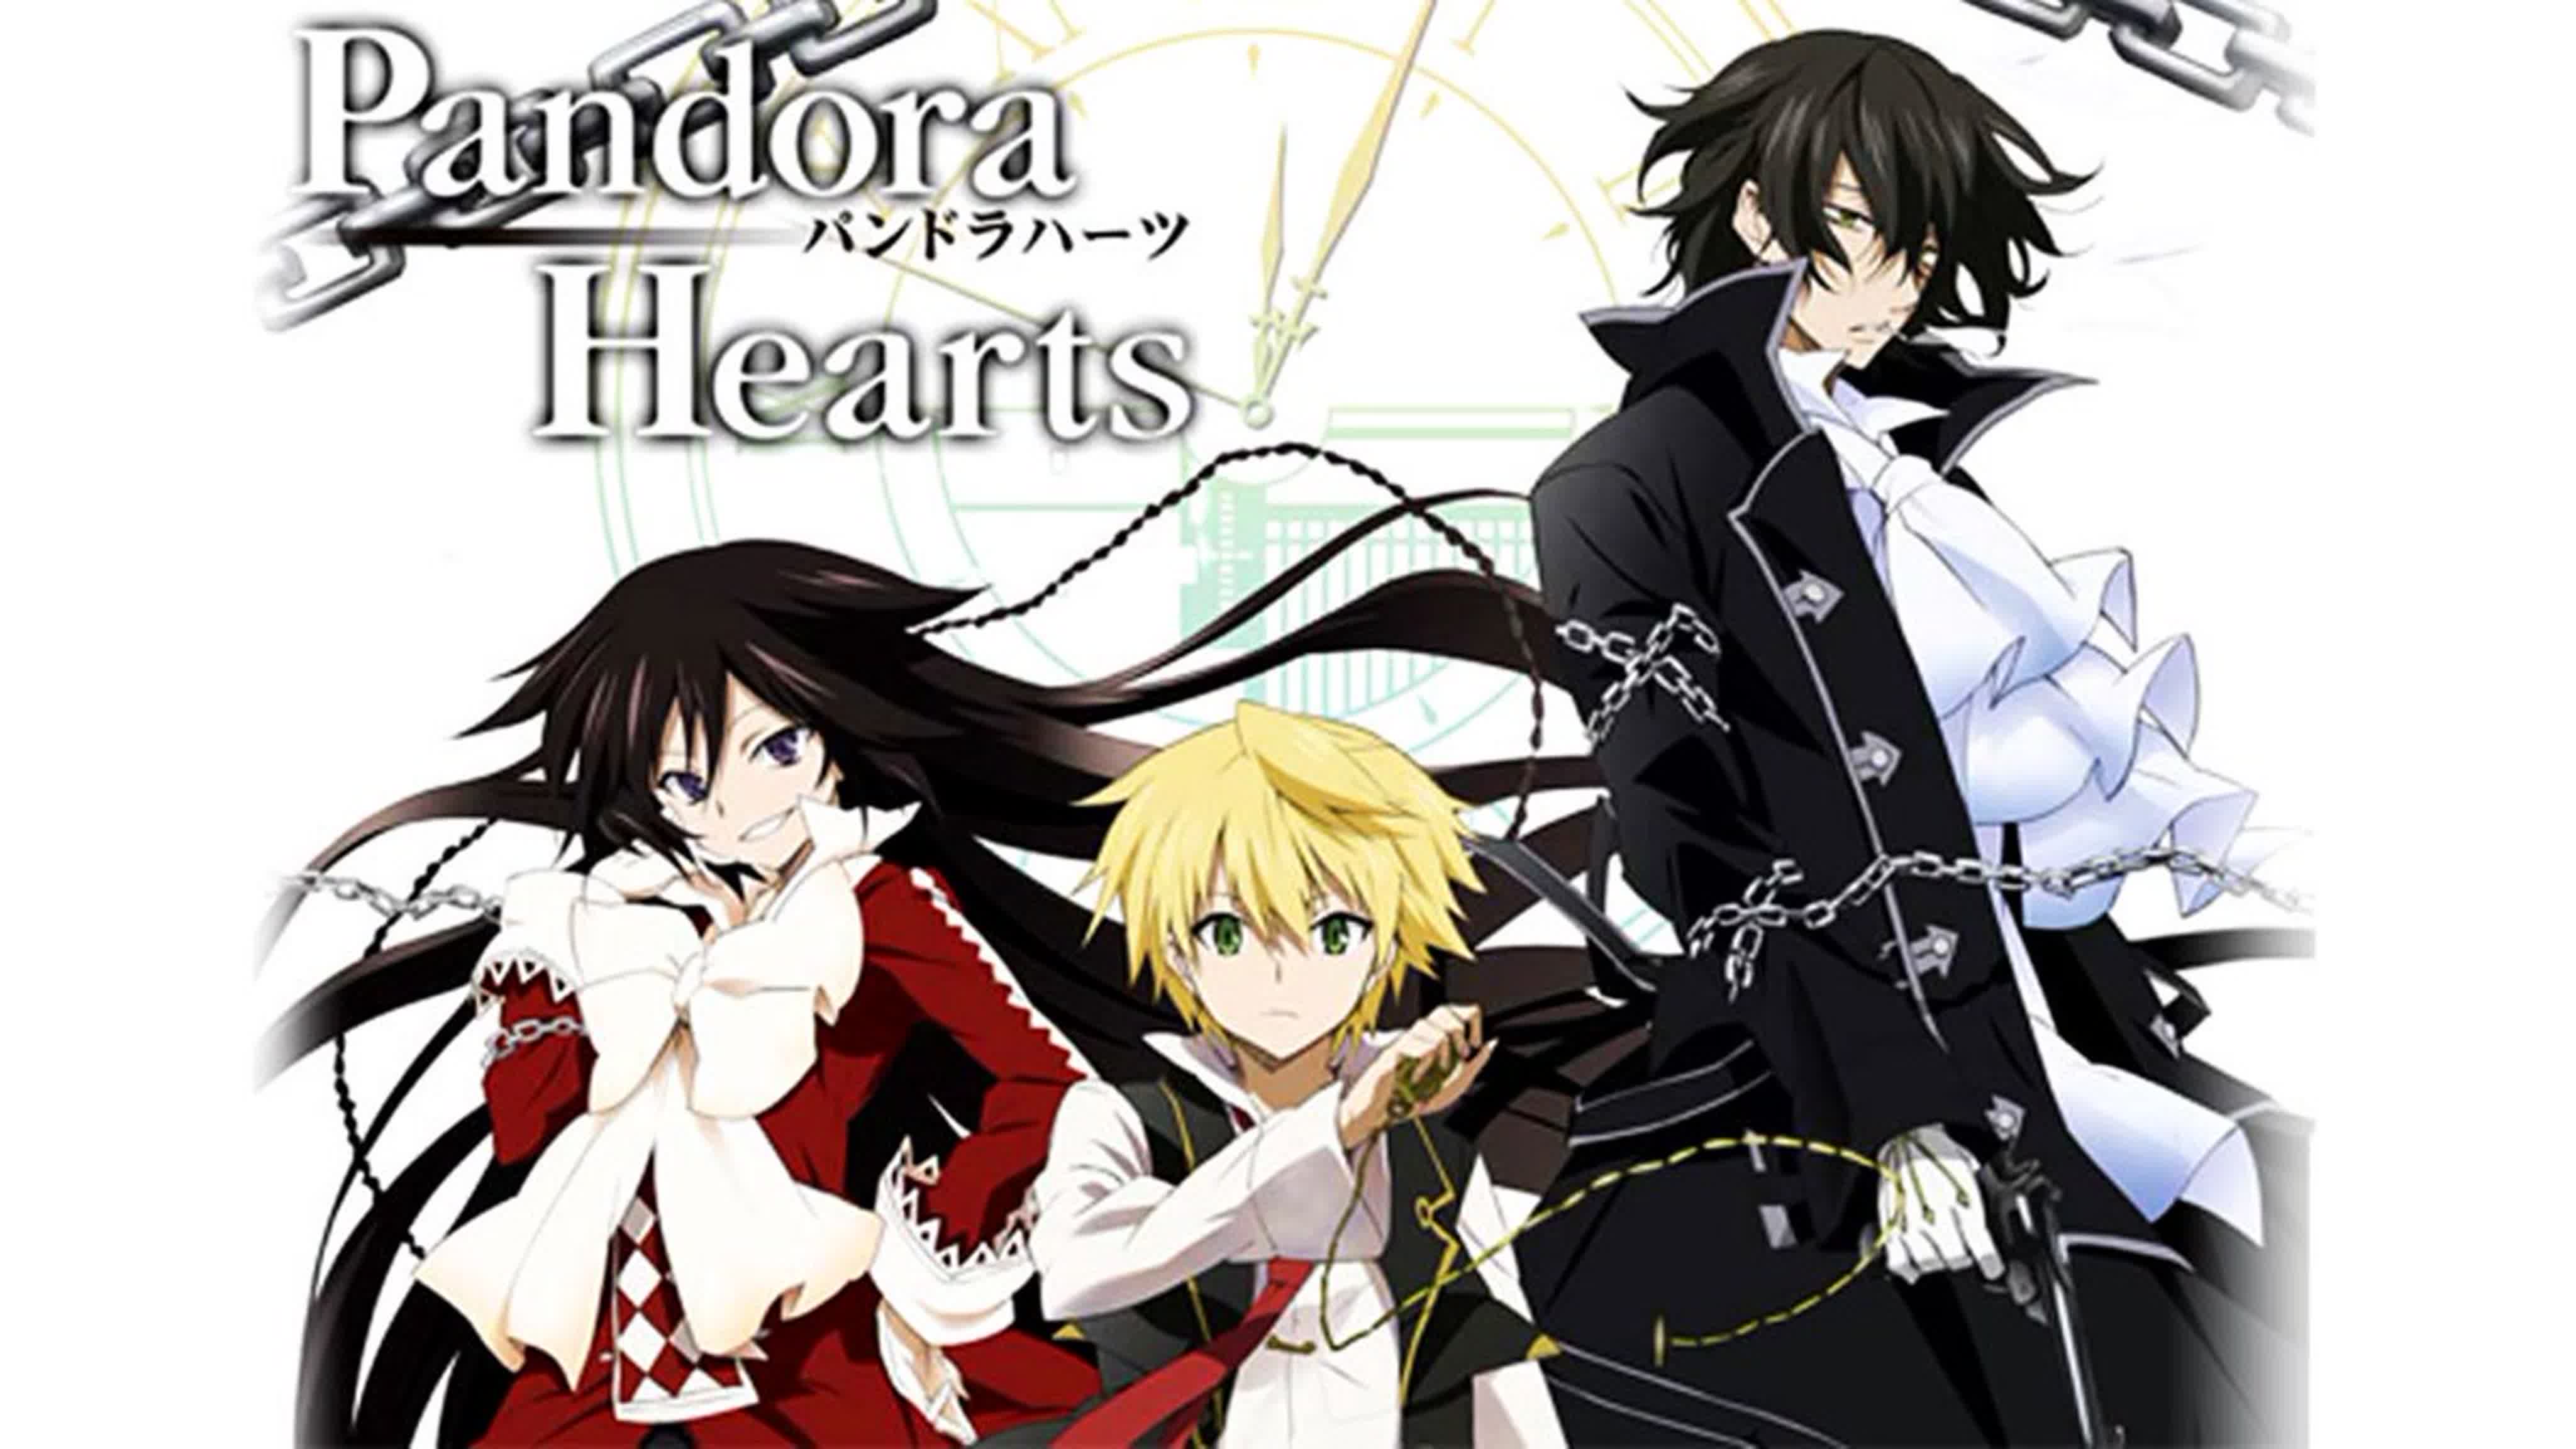 Сердца Пандоры / Pandora Hearts